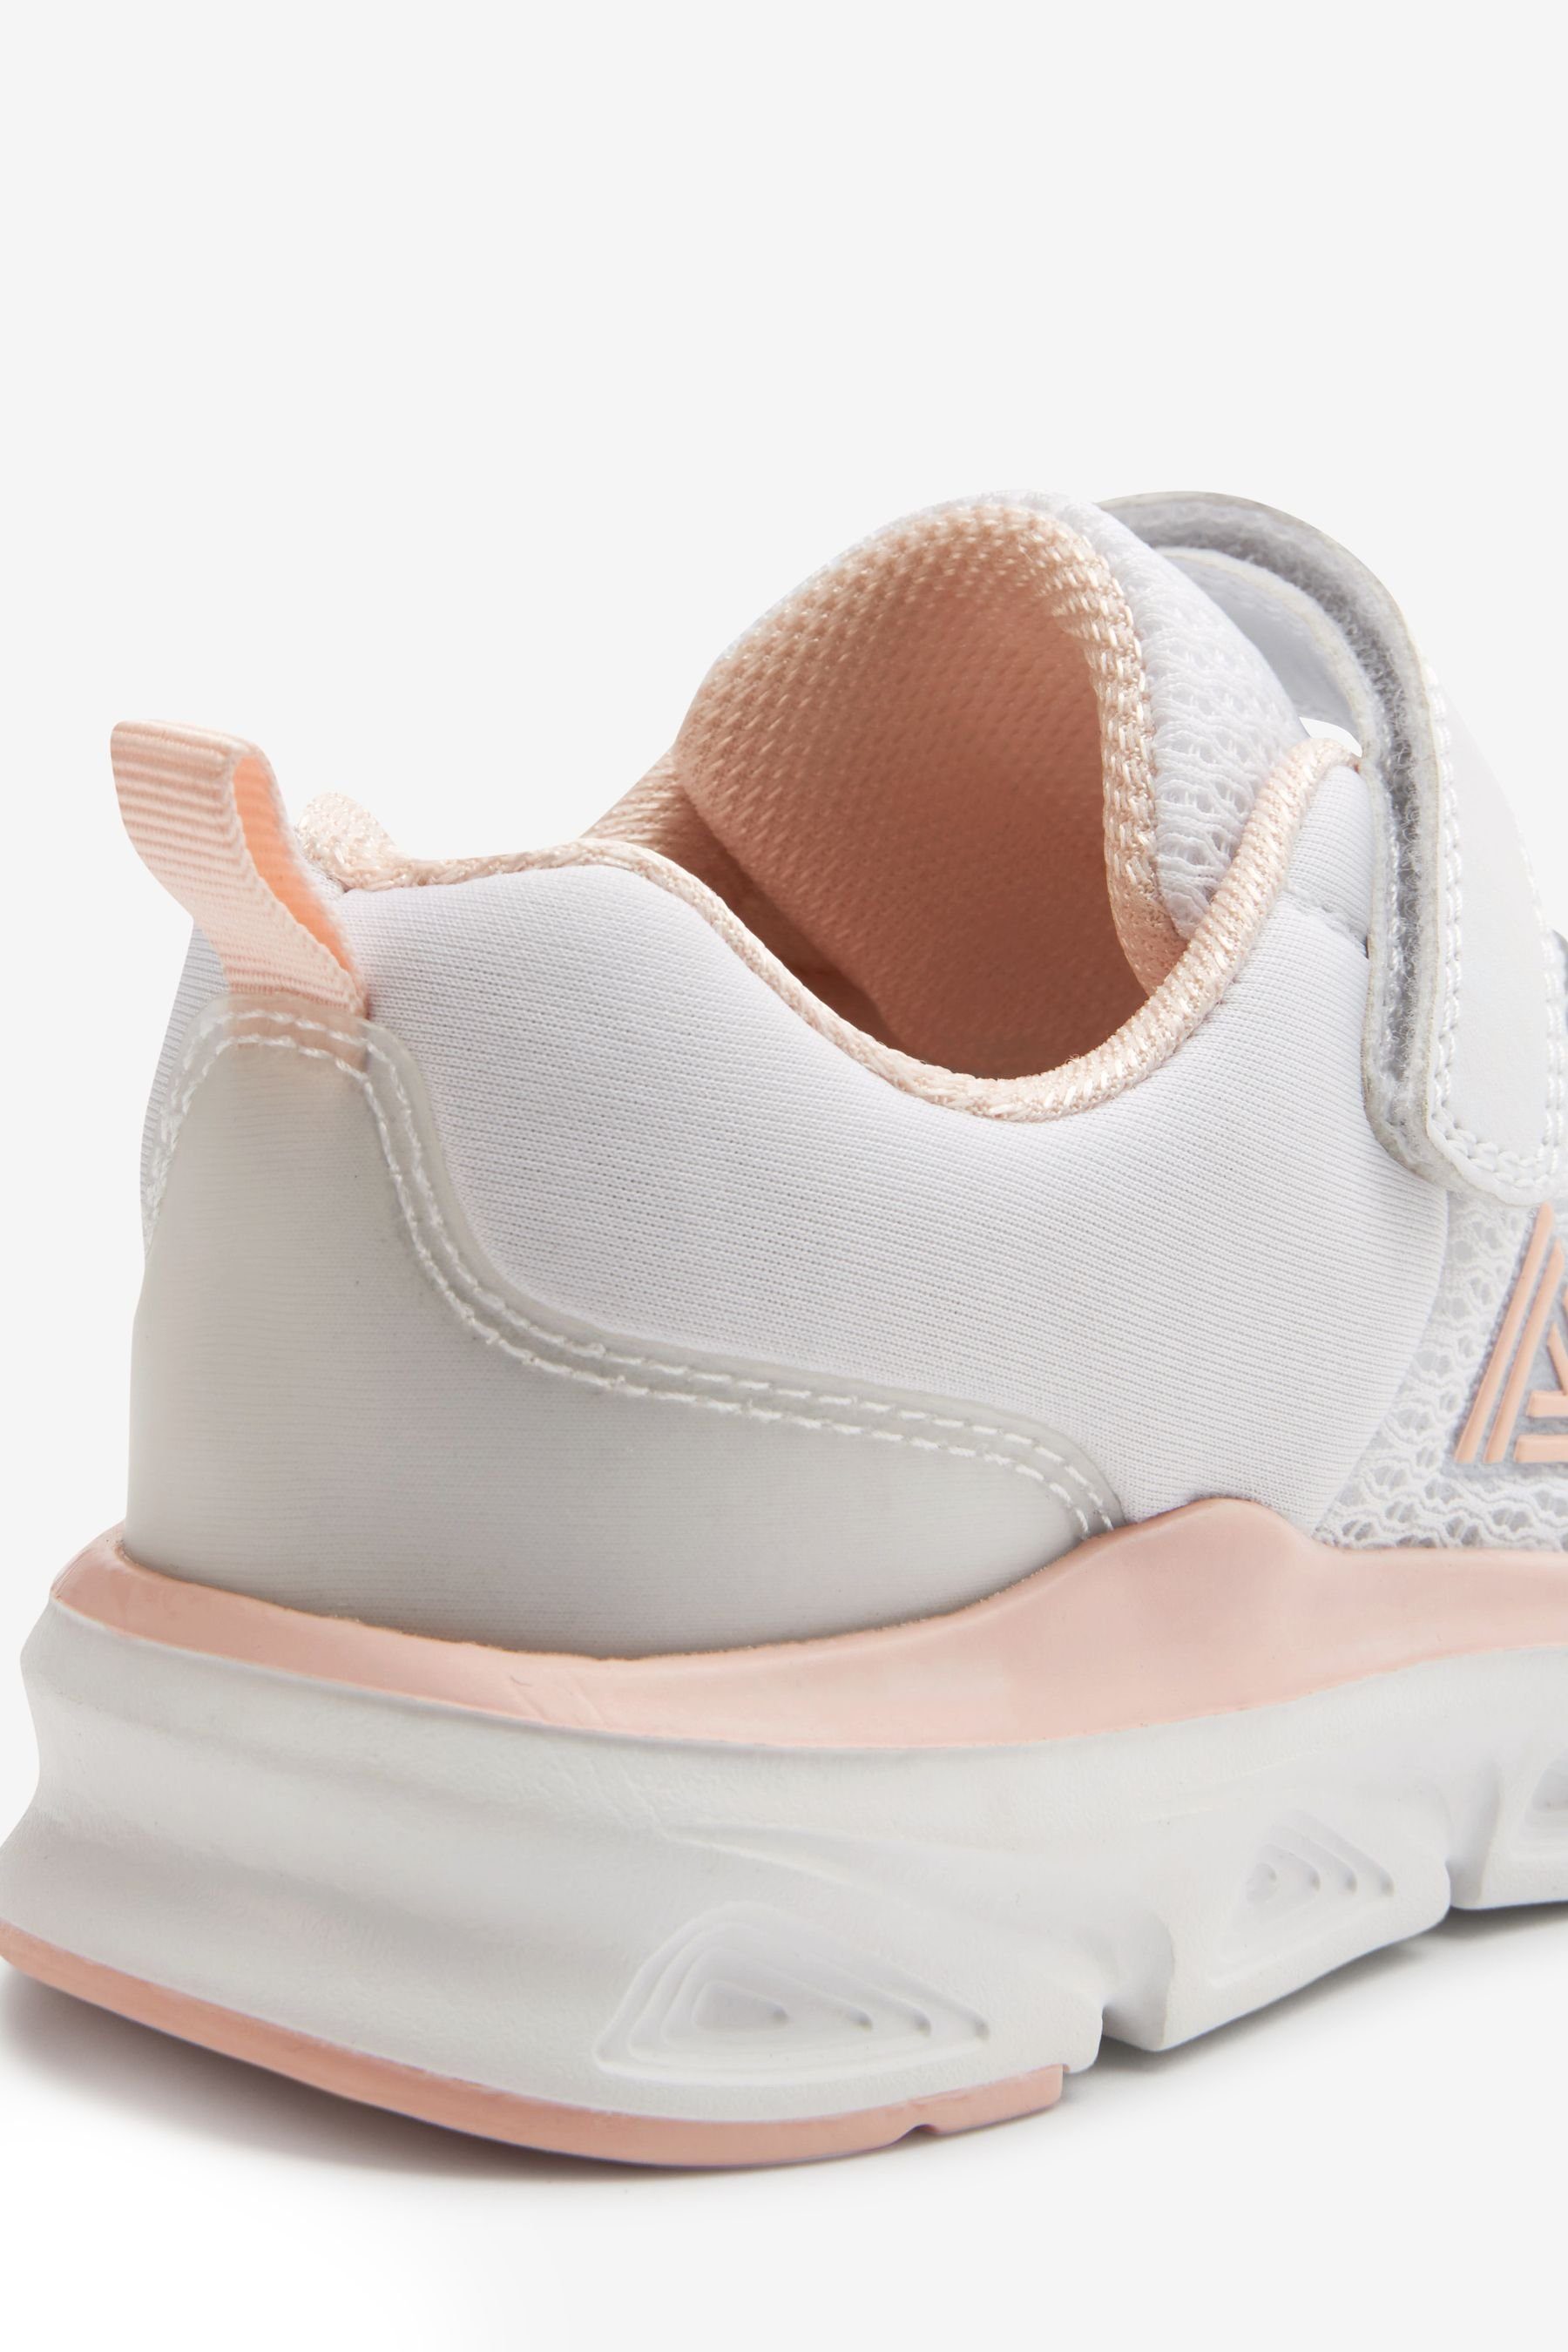 (1-tlg) Next White/Pink Lauf-Turnschuhe Sneaker